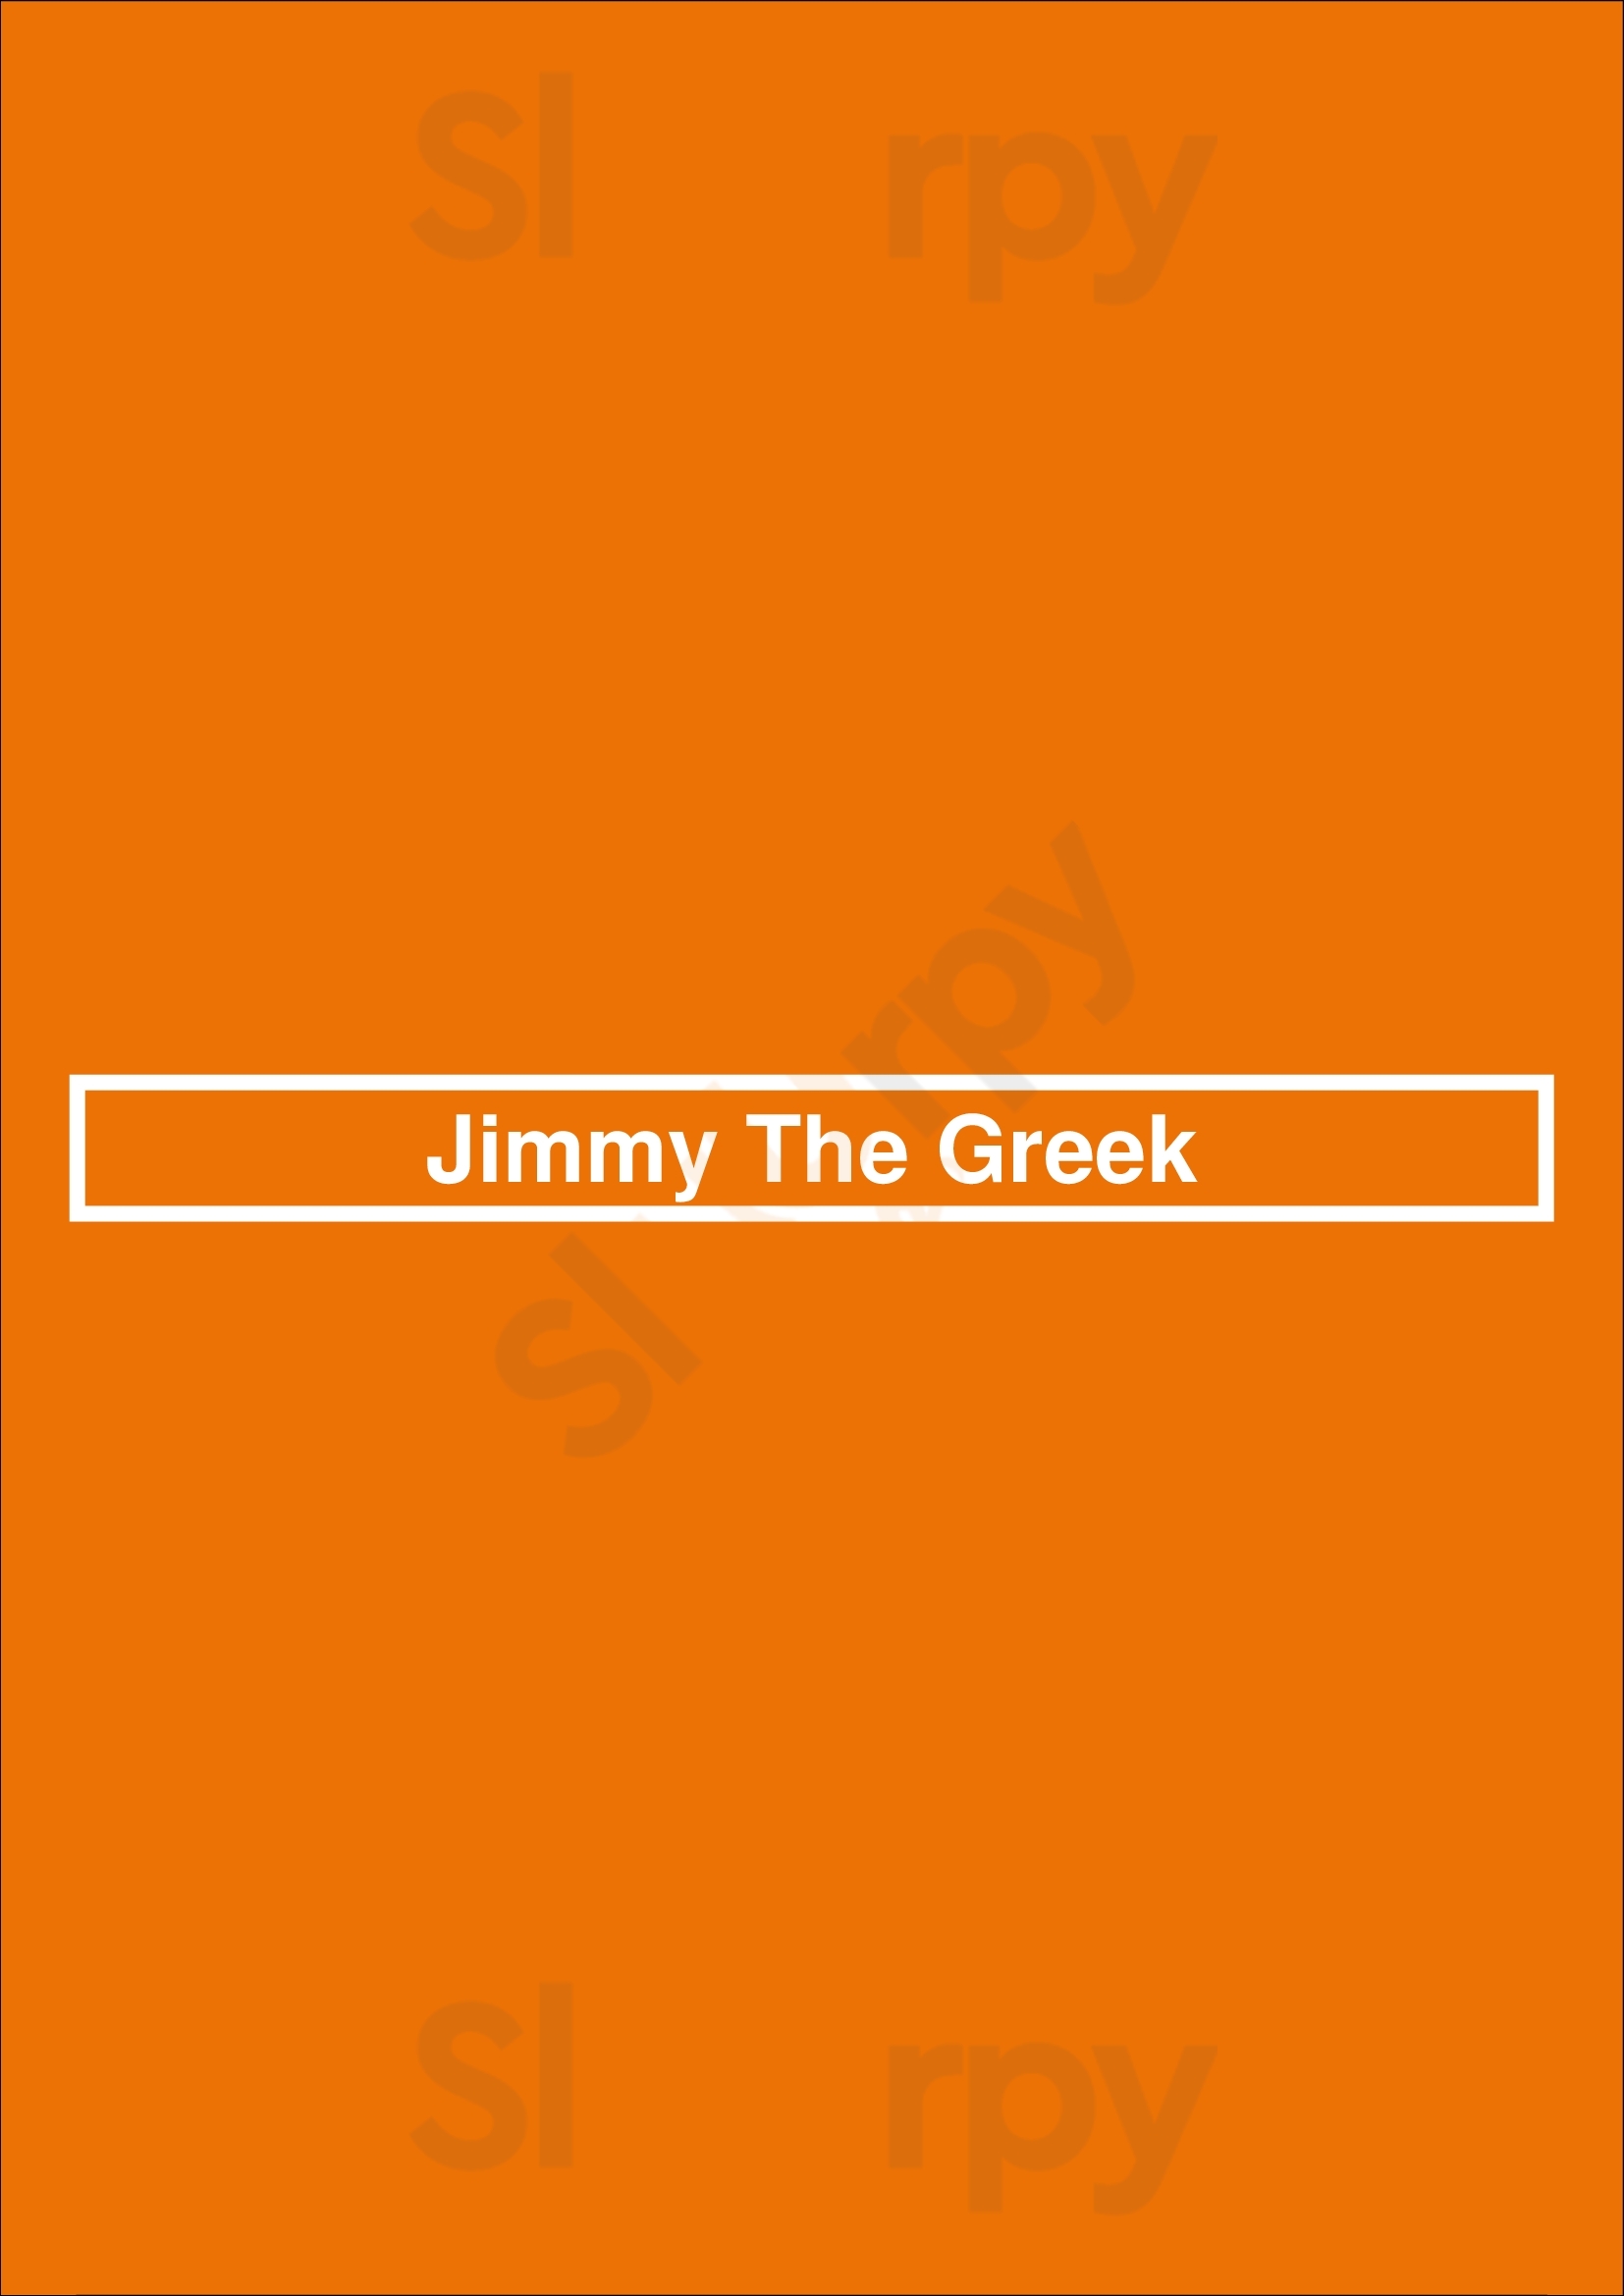 Jimmy The Greek Calgary Menu - 1